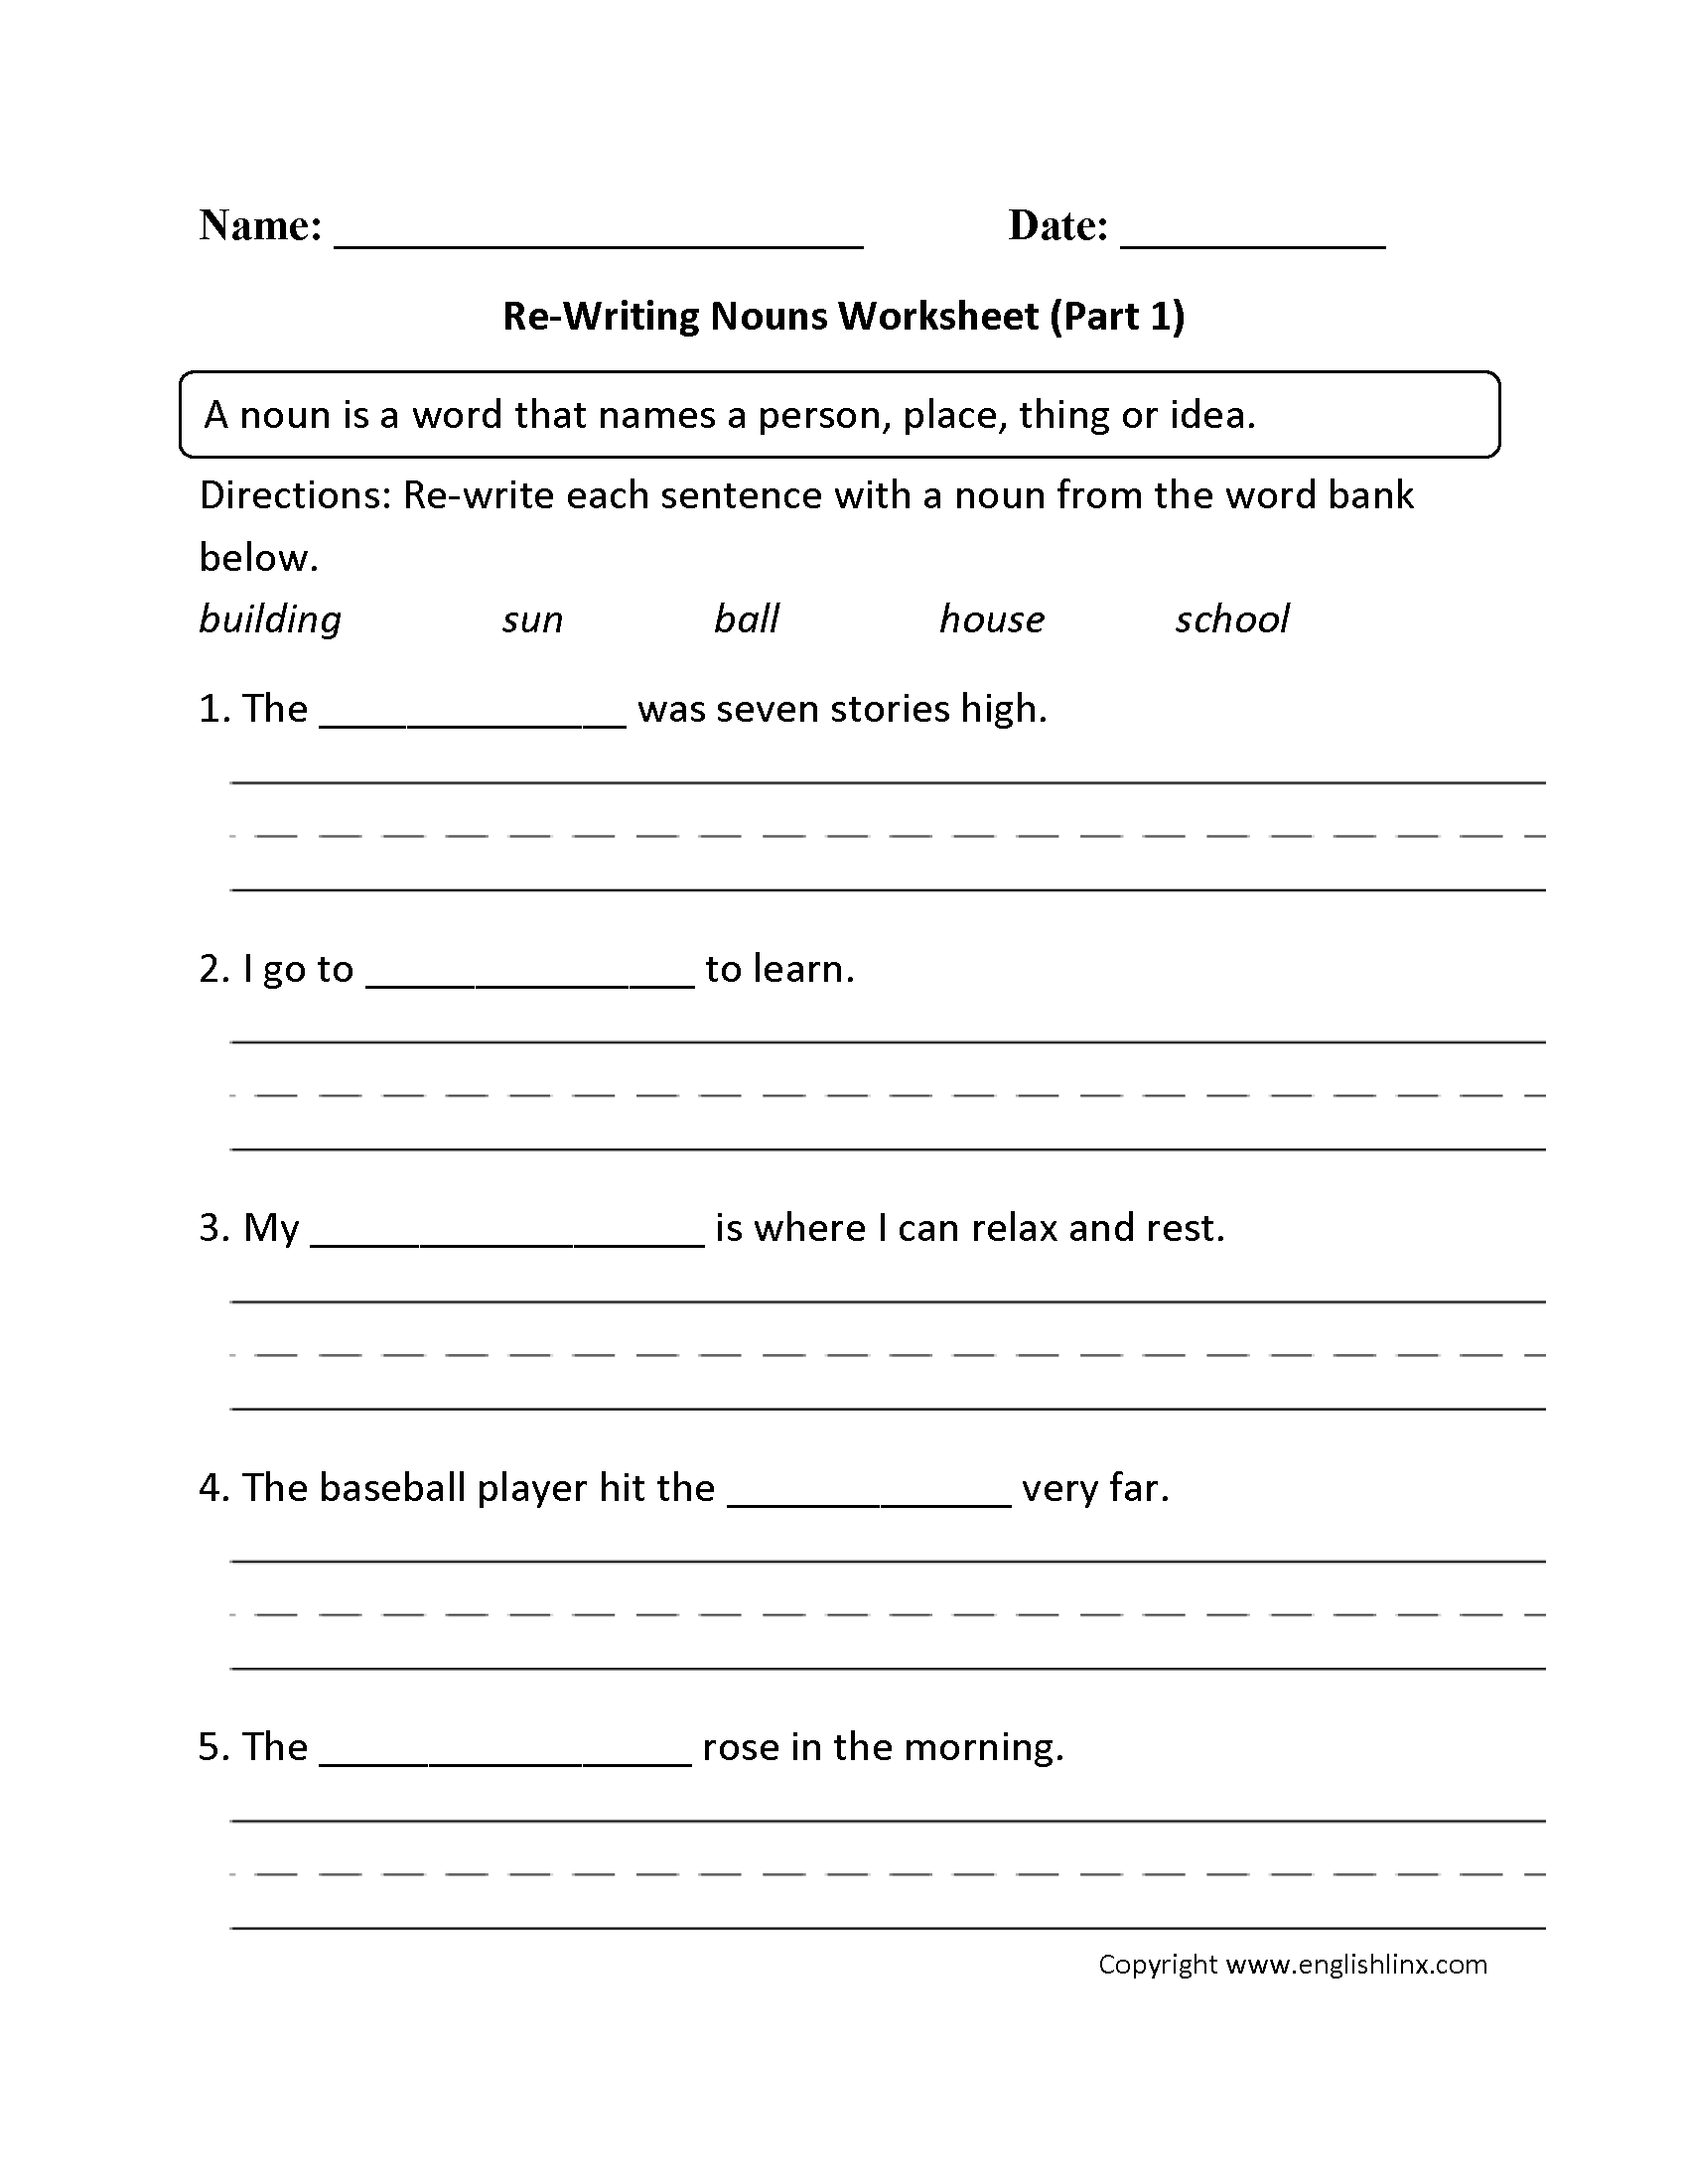 Re-Writing Nouns Worksheet Part 1